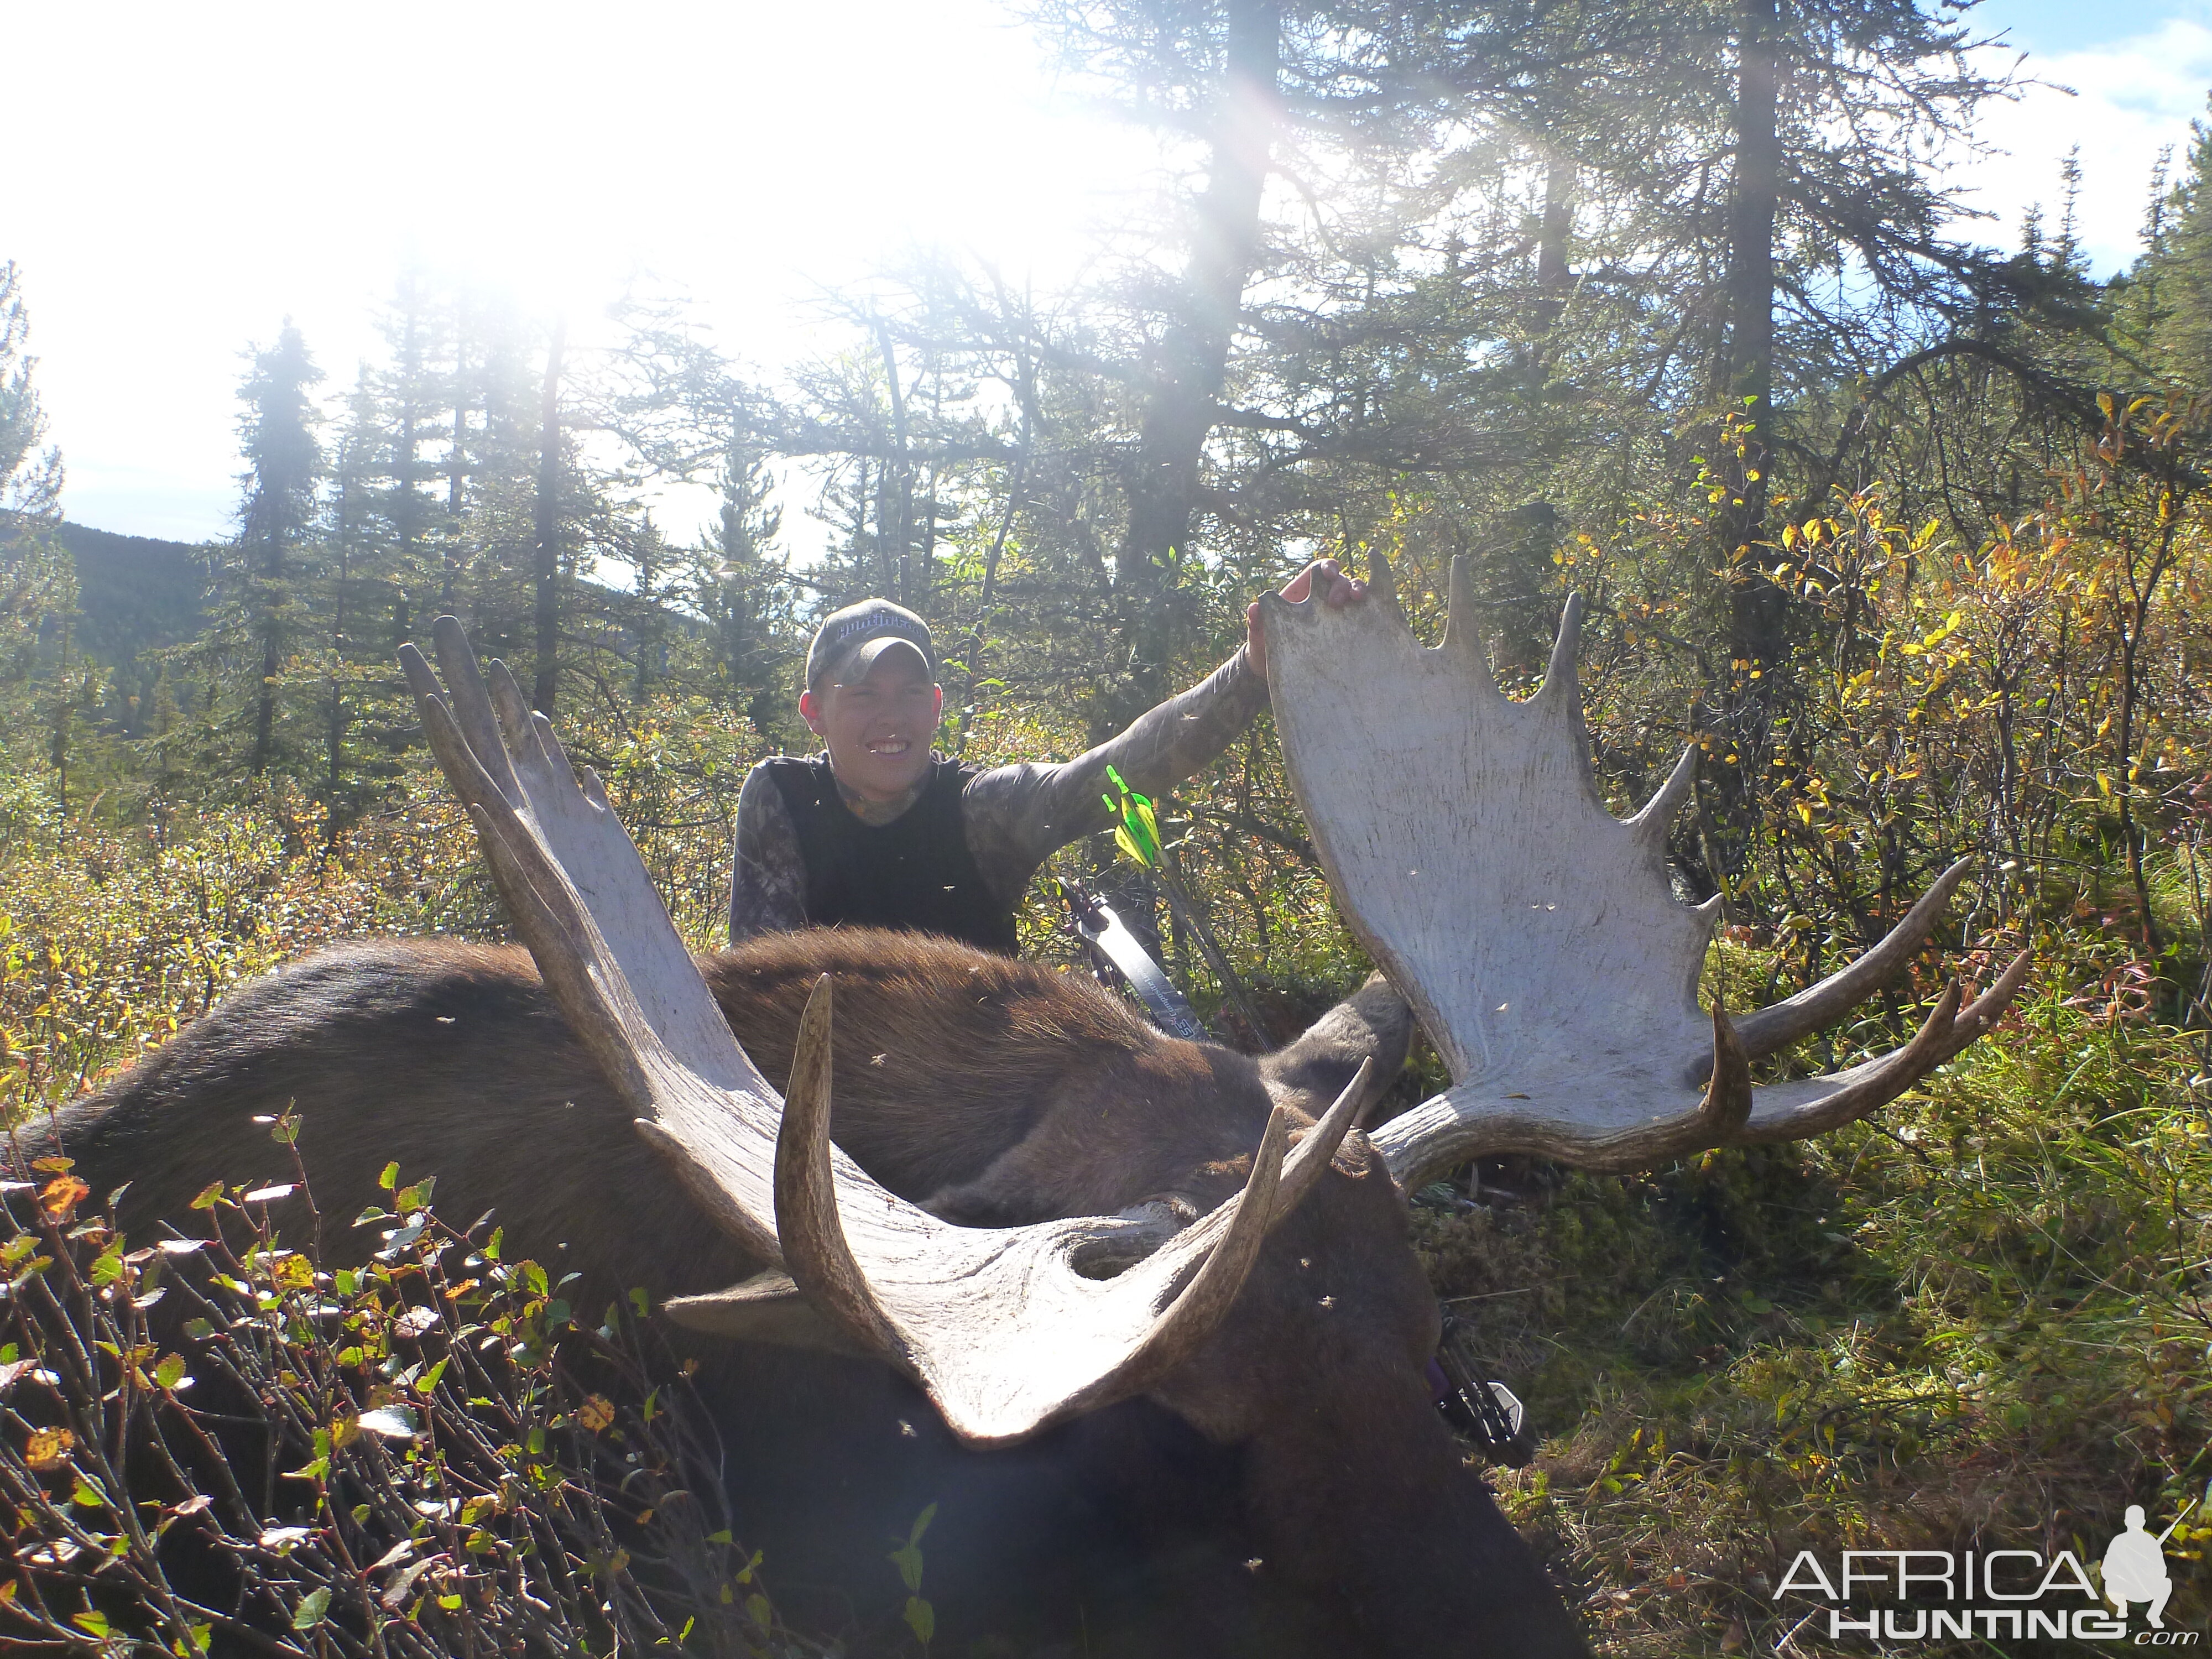 Dakota's British Columbia Moose with a bow